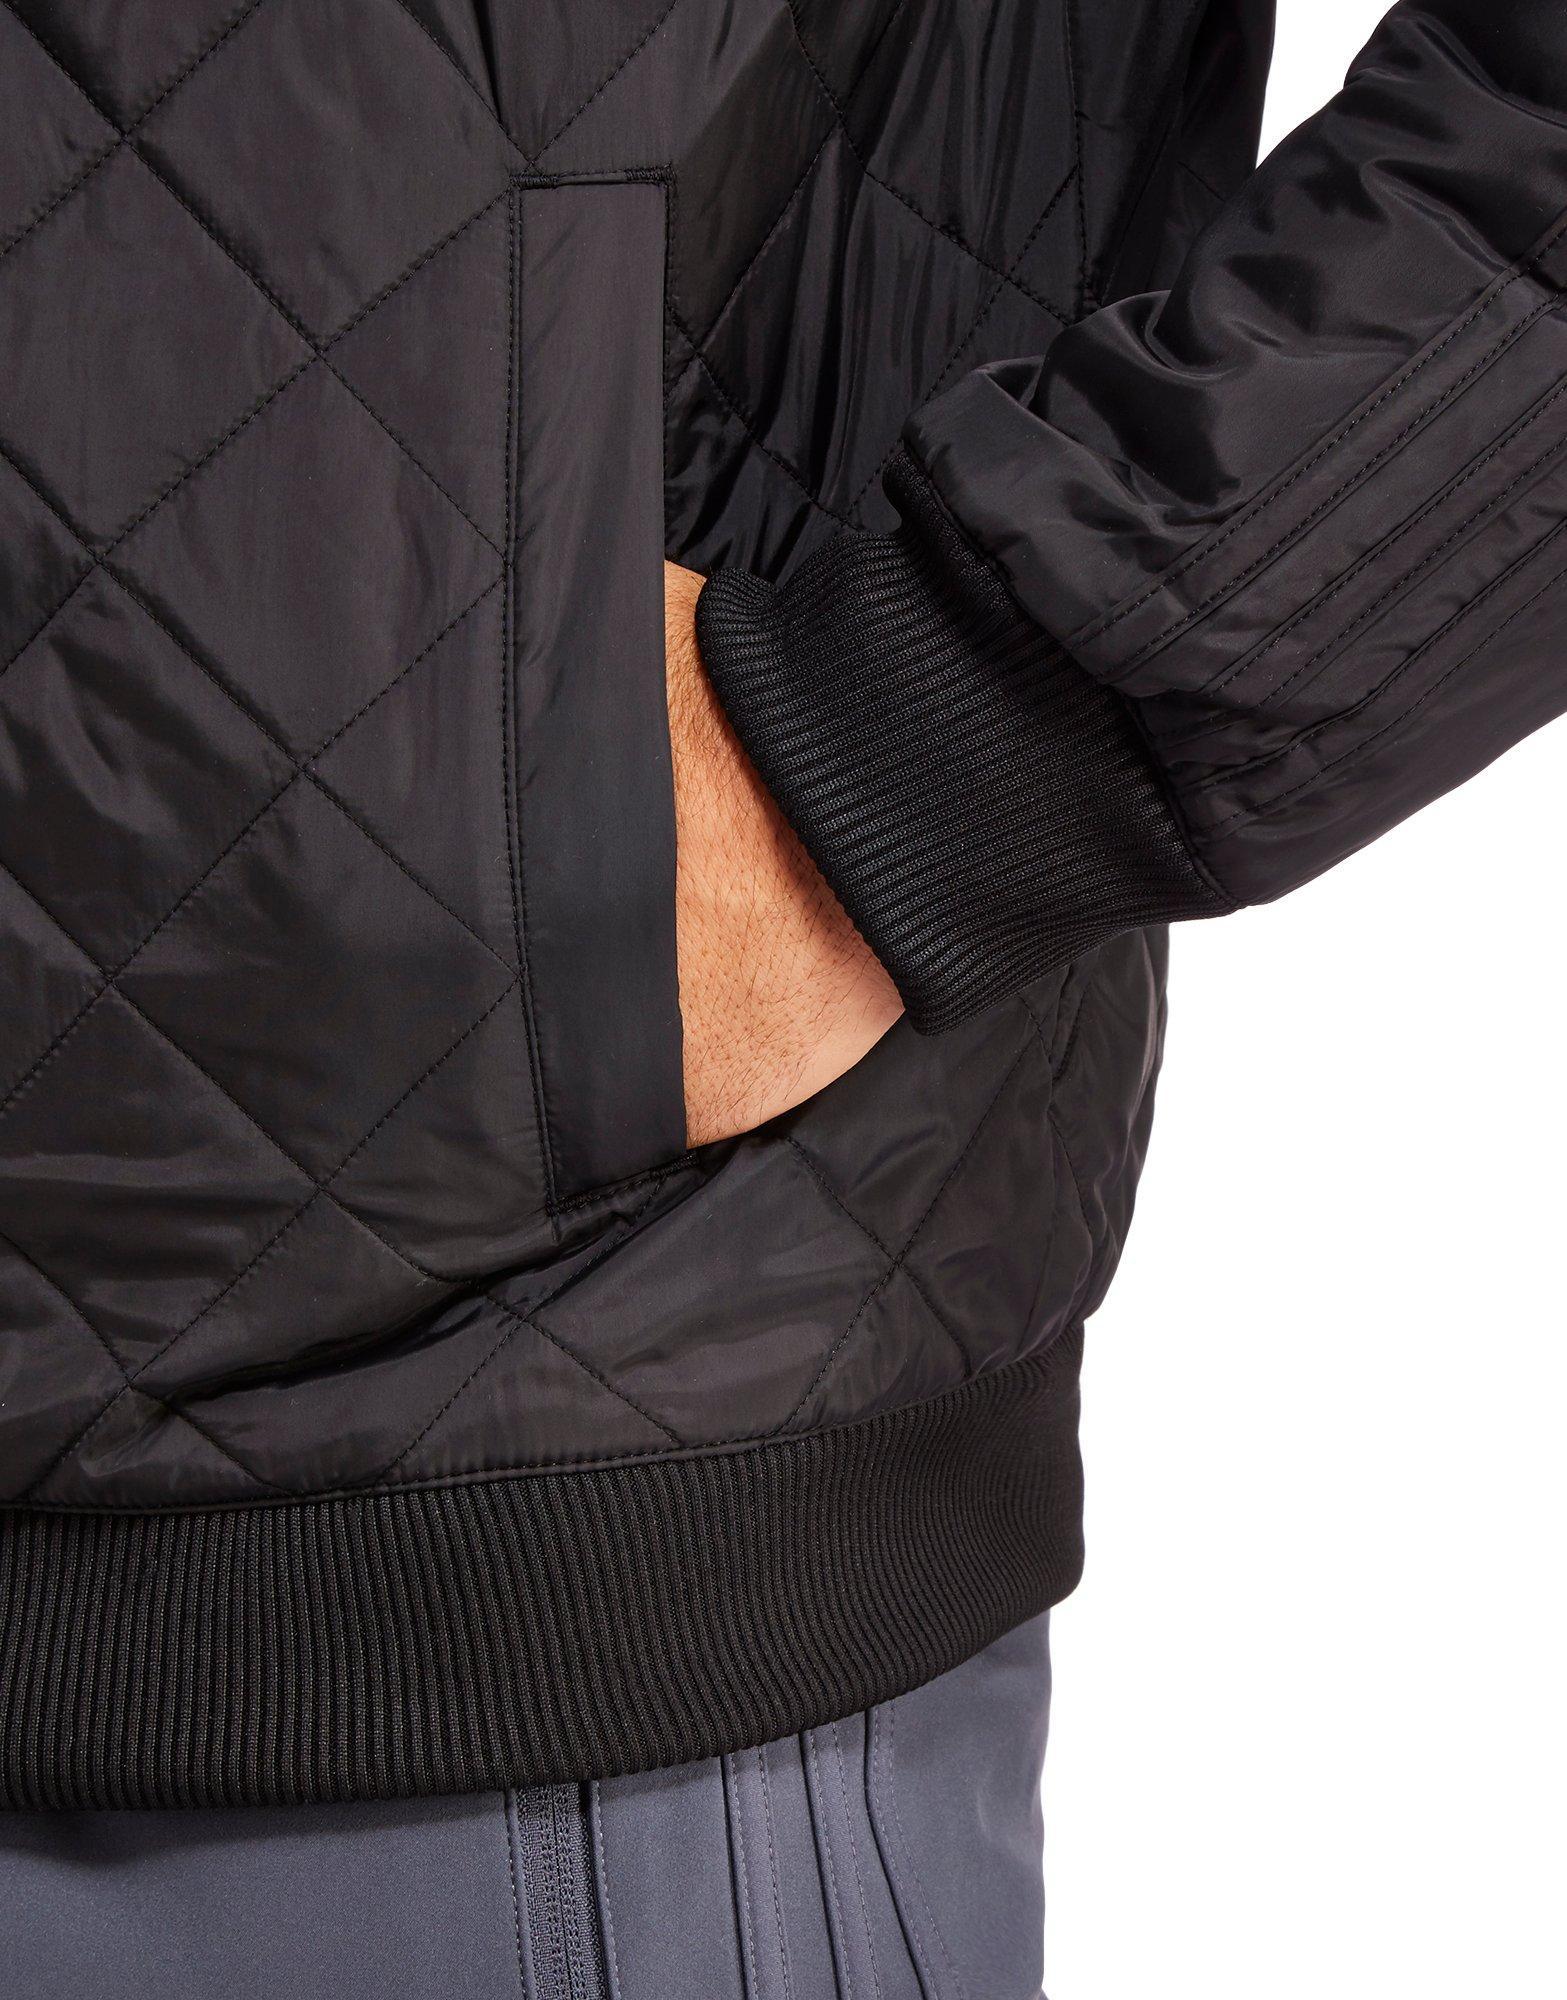 adidas Originals Synthetic Quilt Bomber Jacket in Black for Men - Lyst